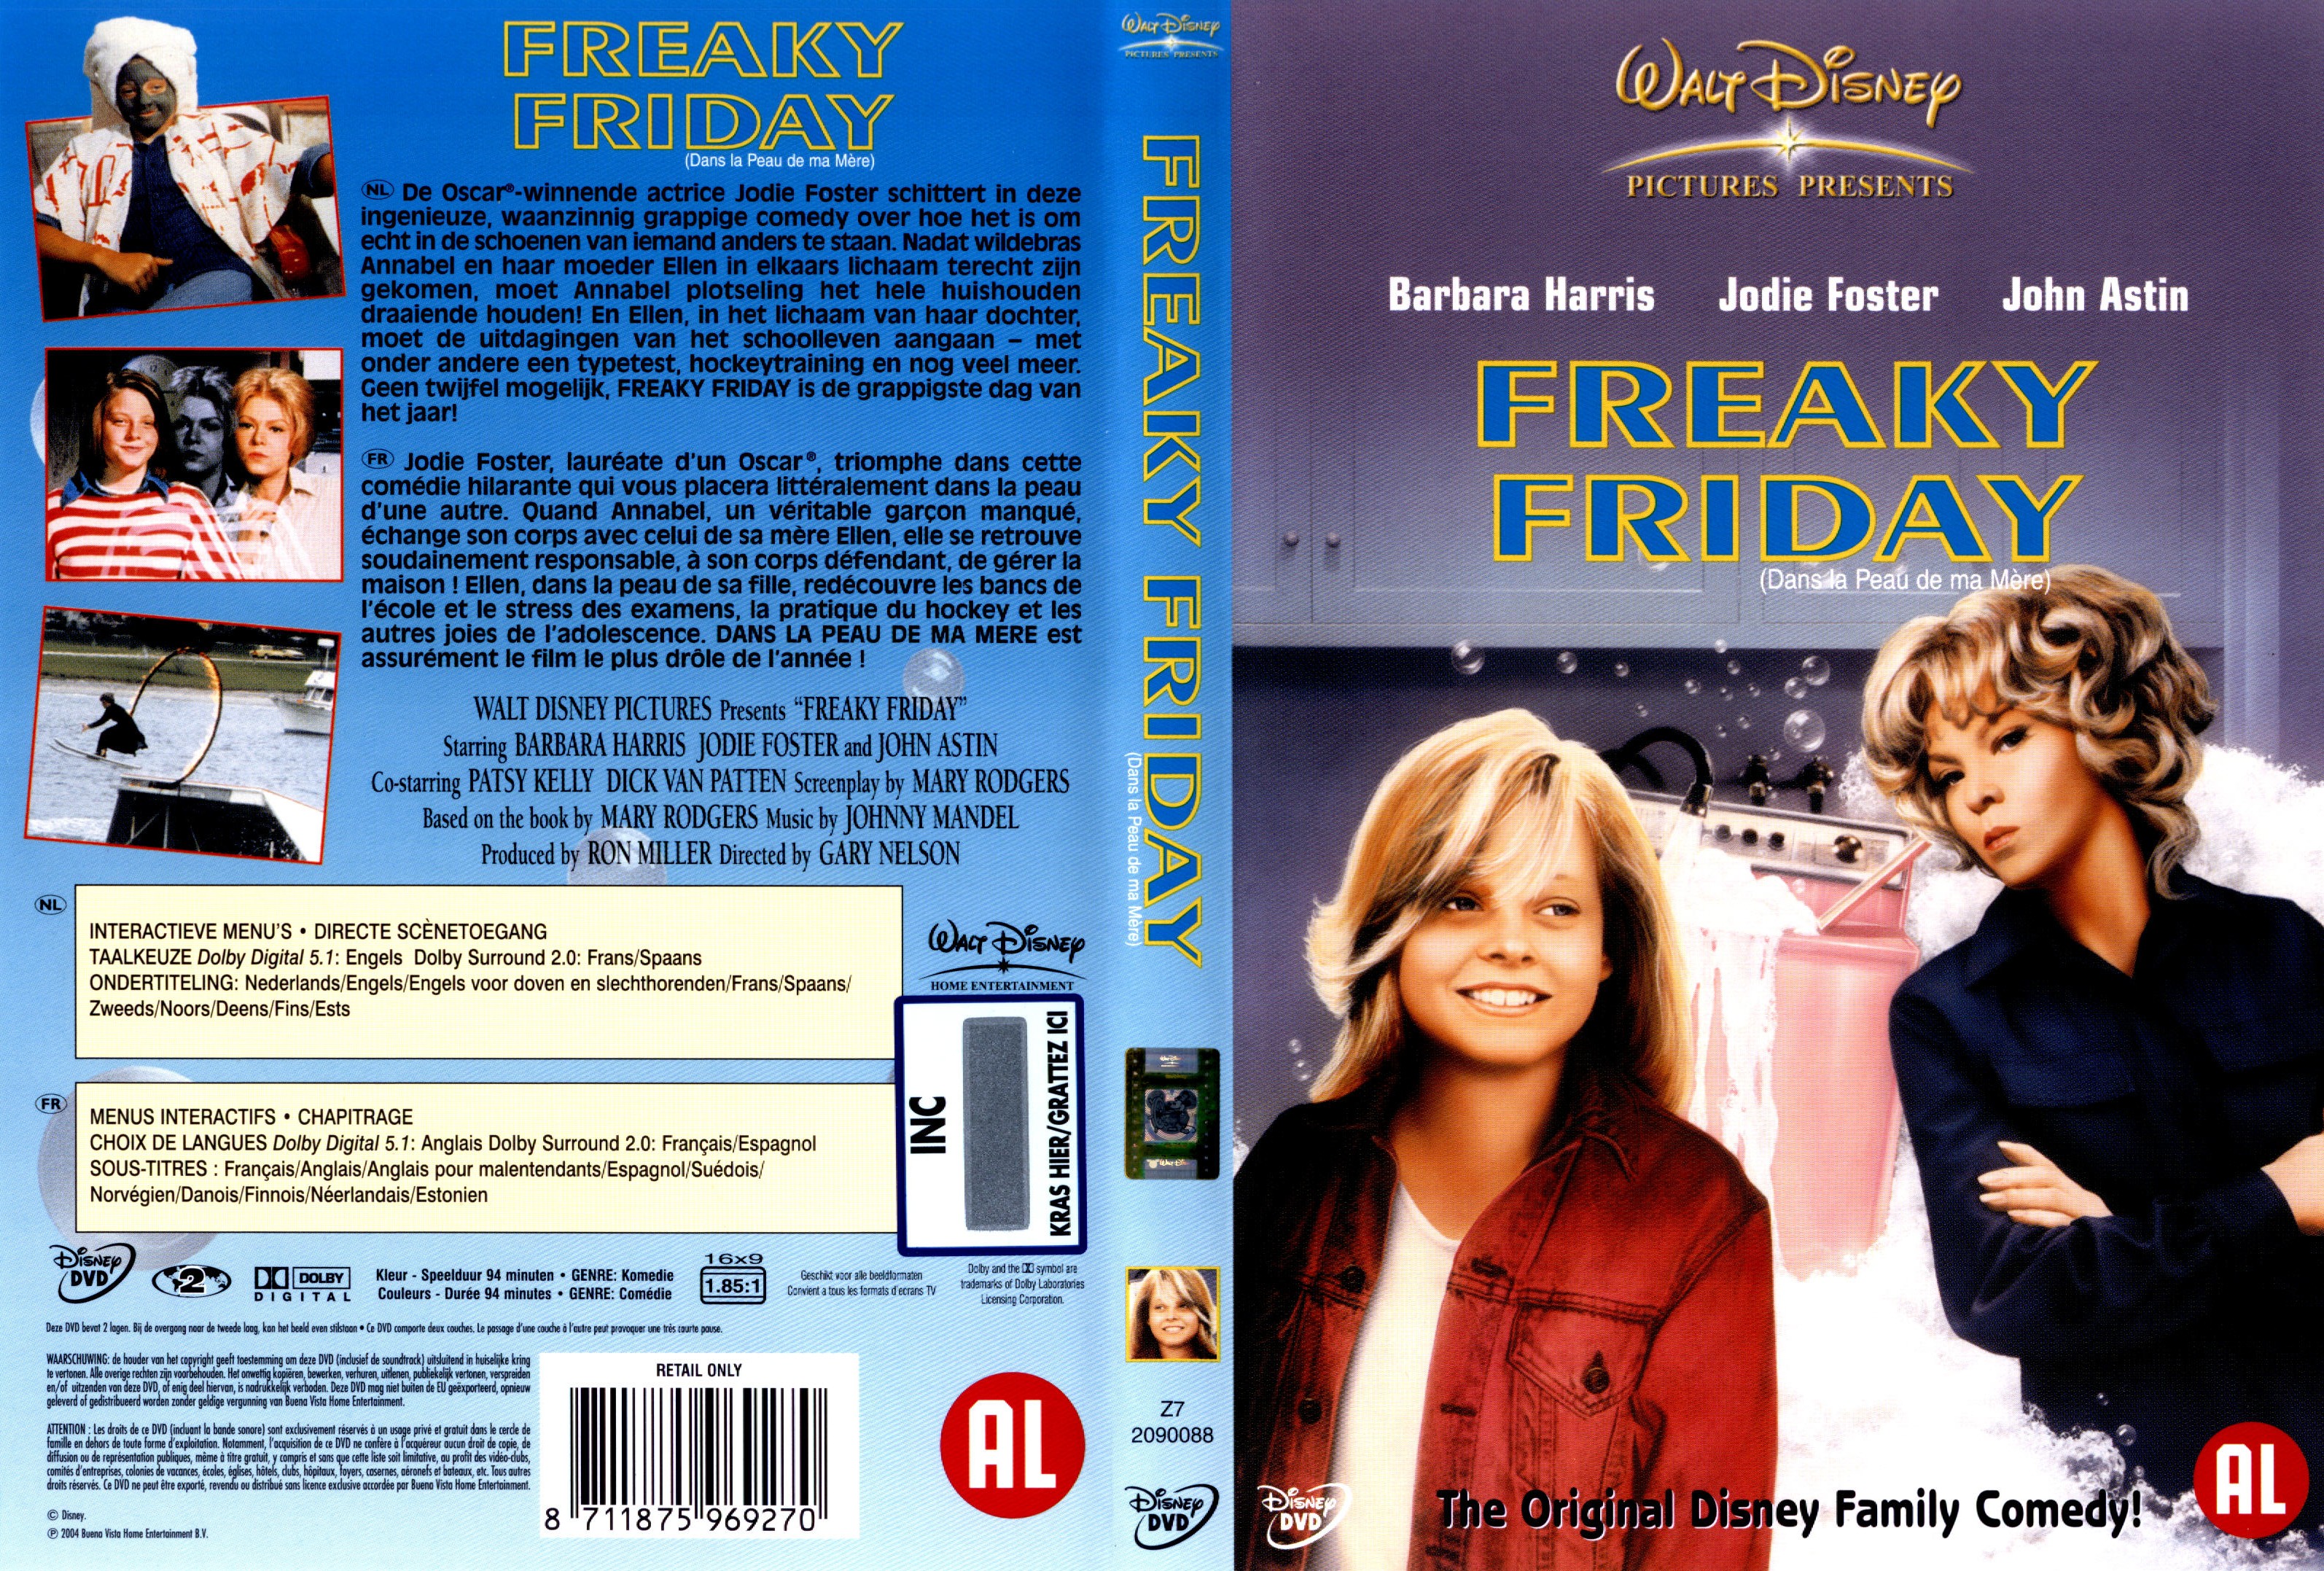 Jaquette DVD Freaky friday - dans la peau de ma mre (Jodie Foster)